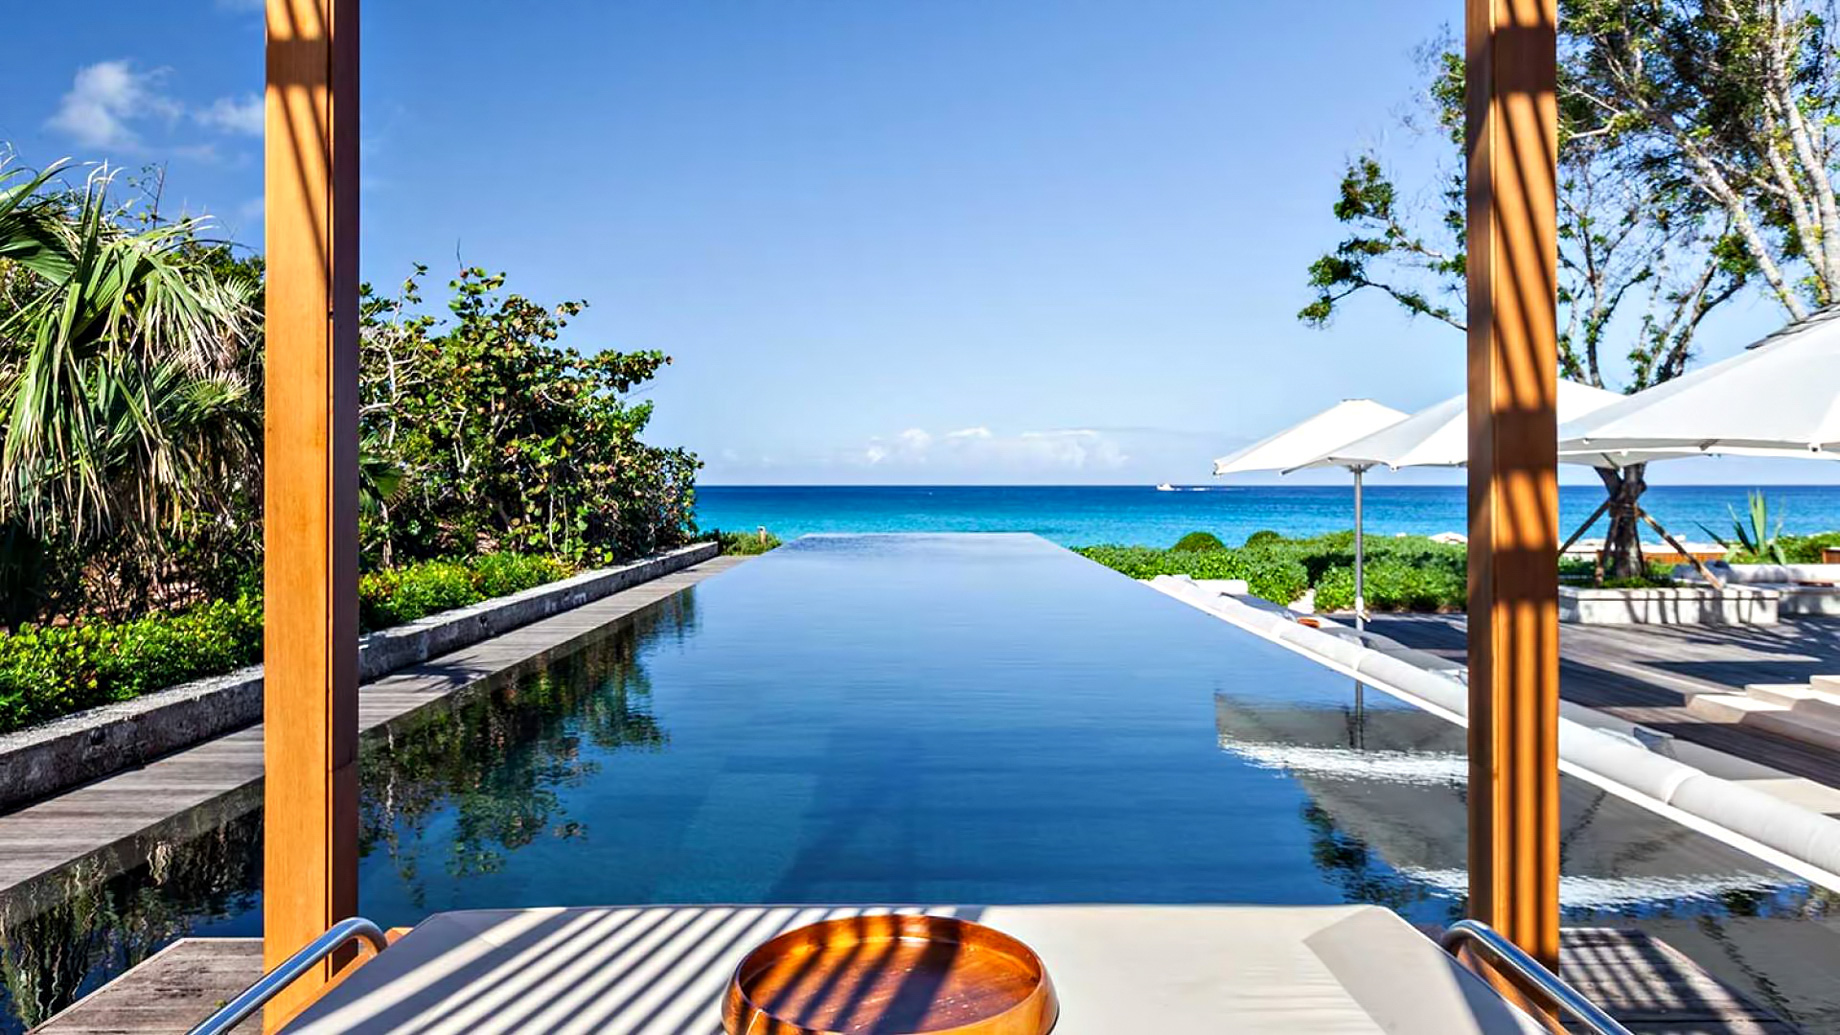 Amanyara Resort – Providenciales, Turks and Caicos Islands – Artist Ocean Villa Infinity Pool Deck View